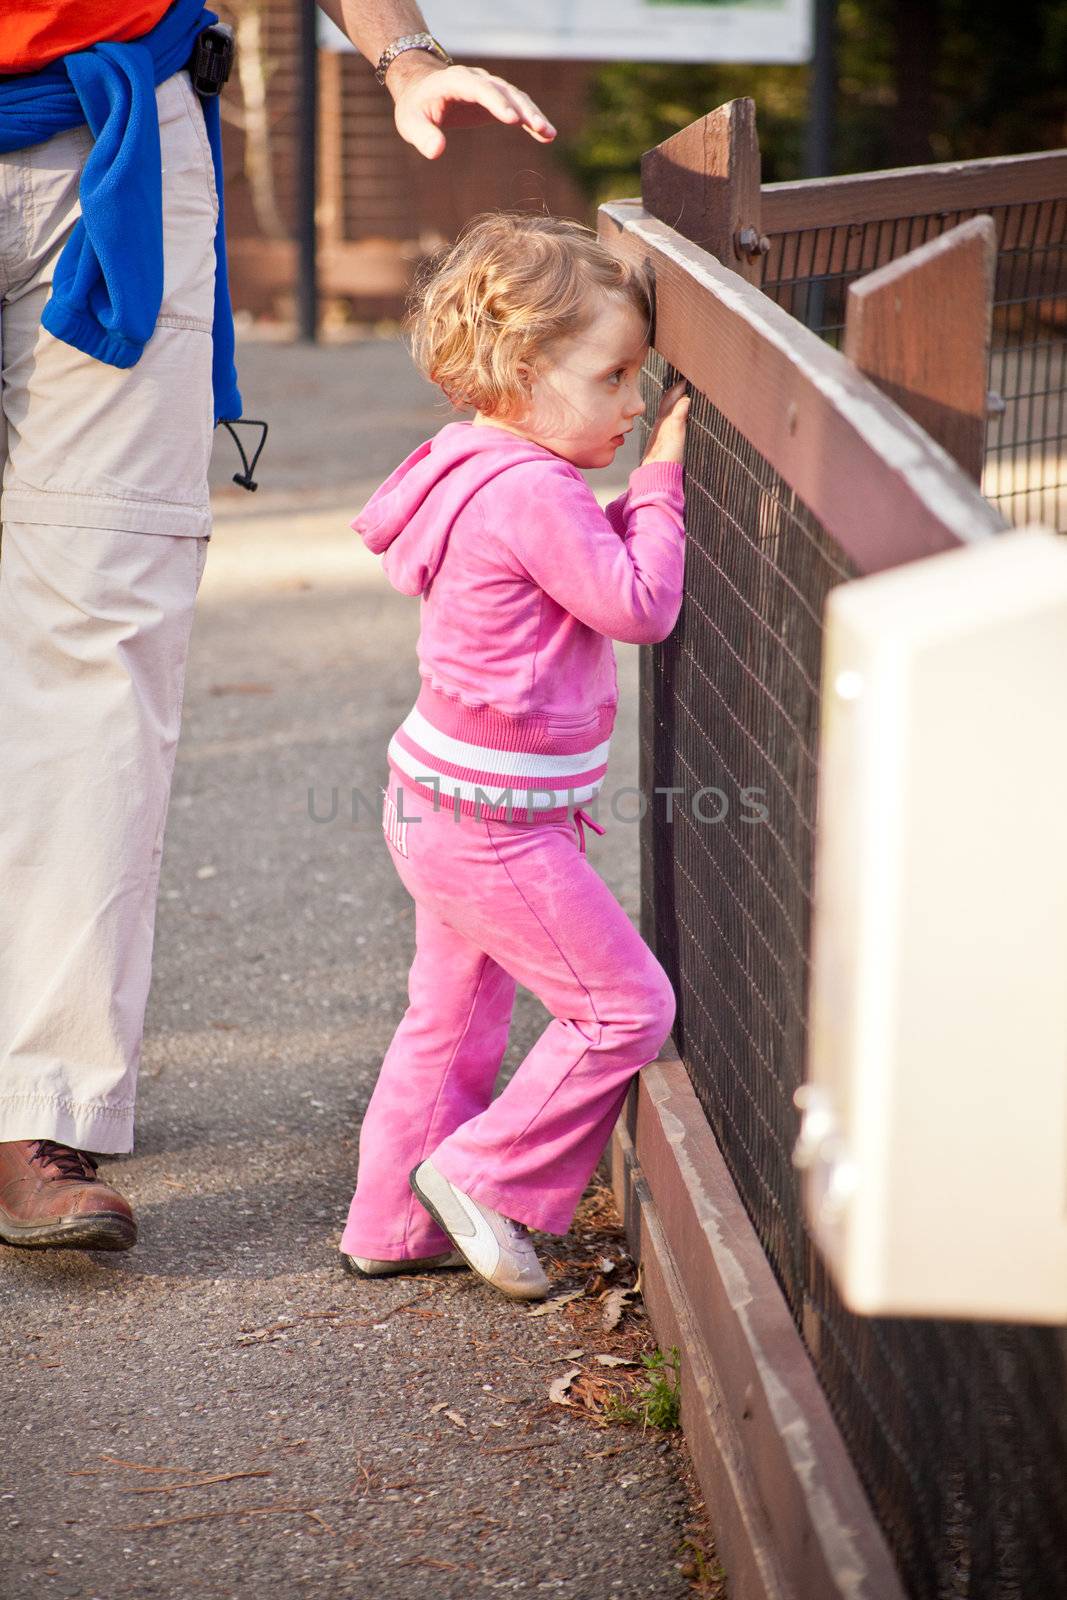 Cute European toddler girl walking around and exploring outdoors.